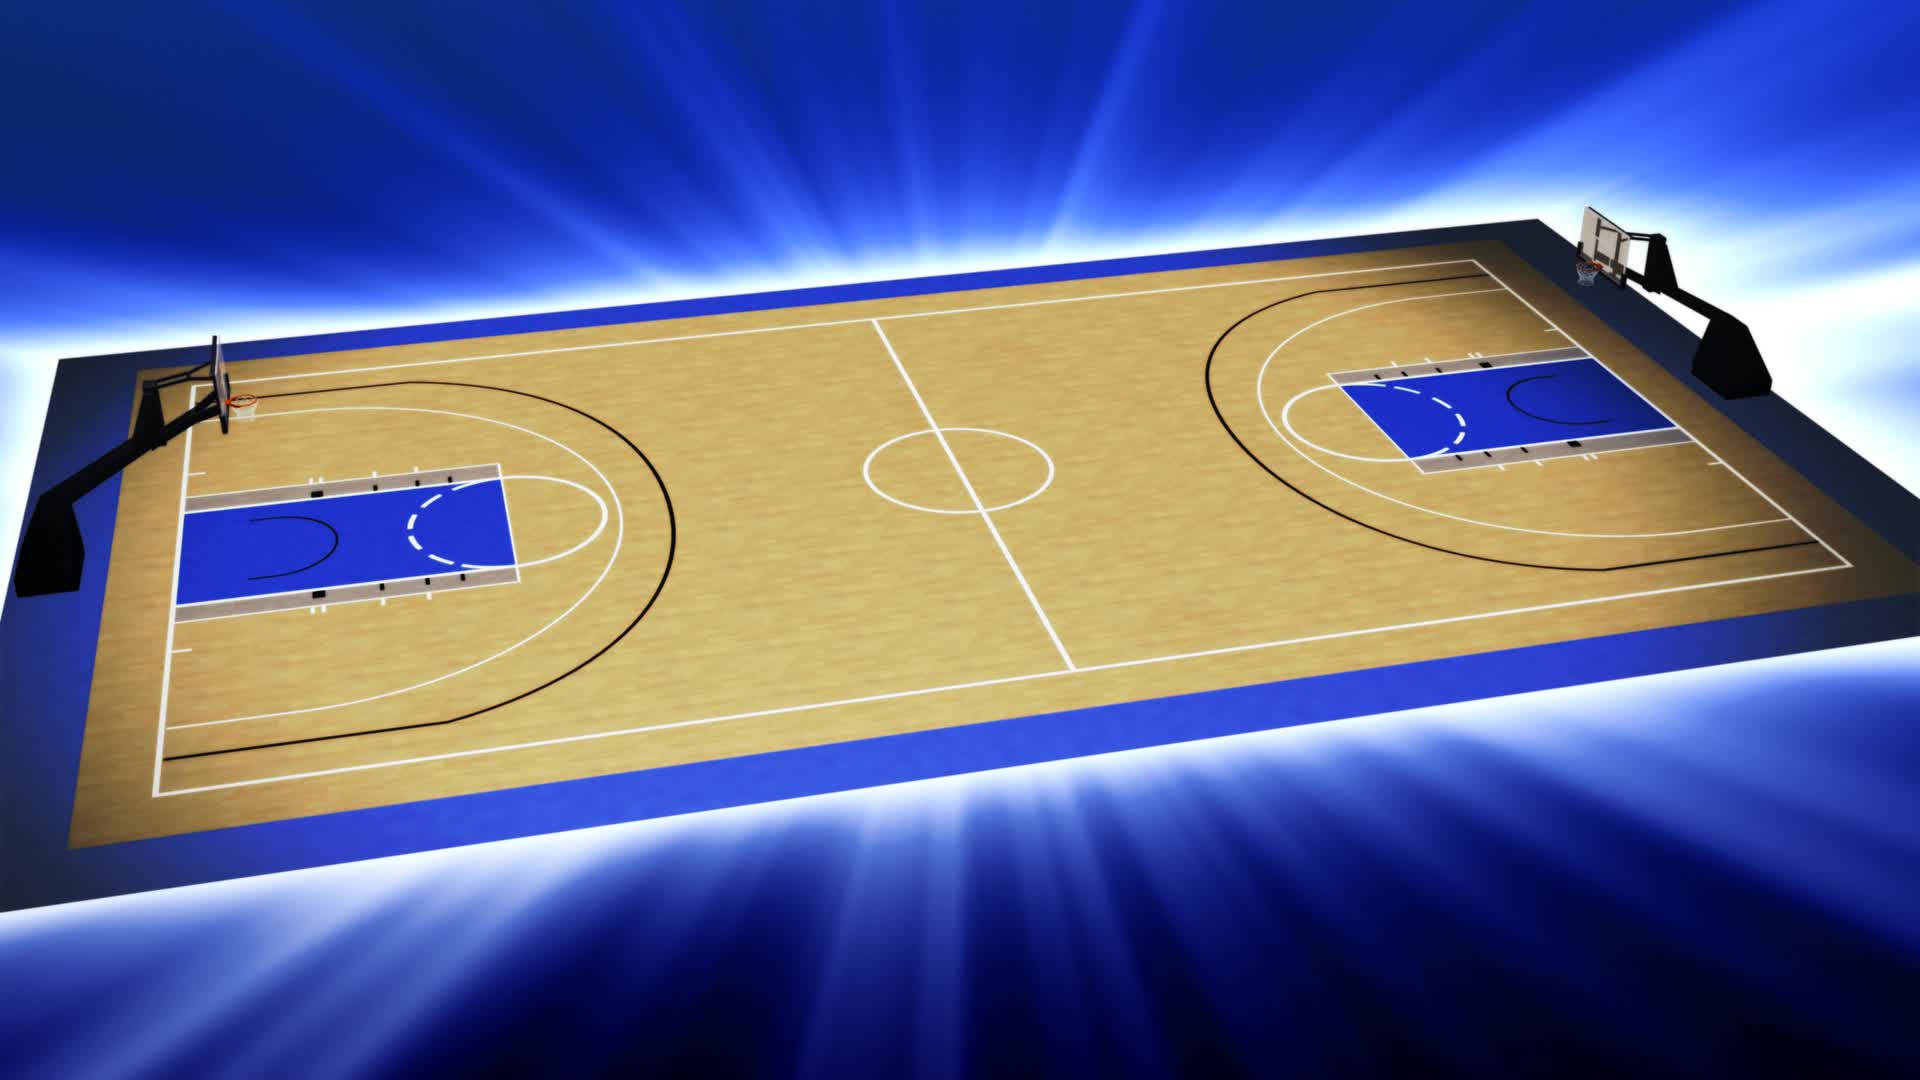 Basketball court animation ~ Stock Video #12268925 | Pond5